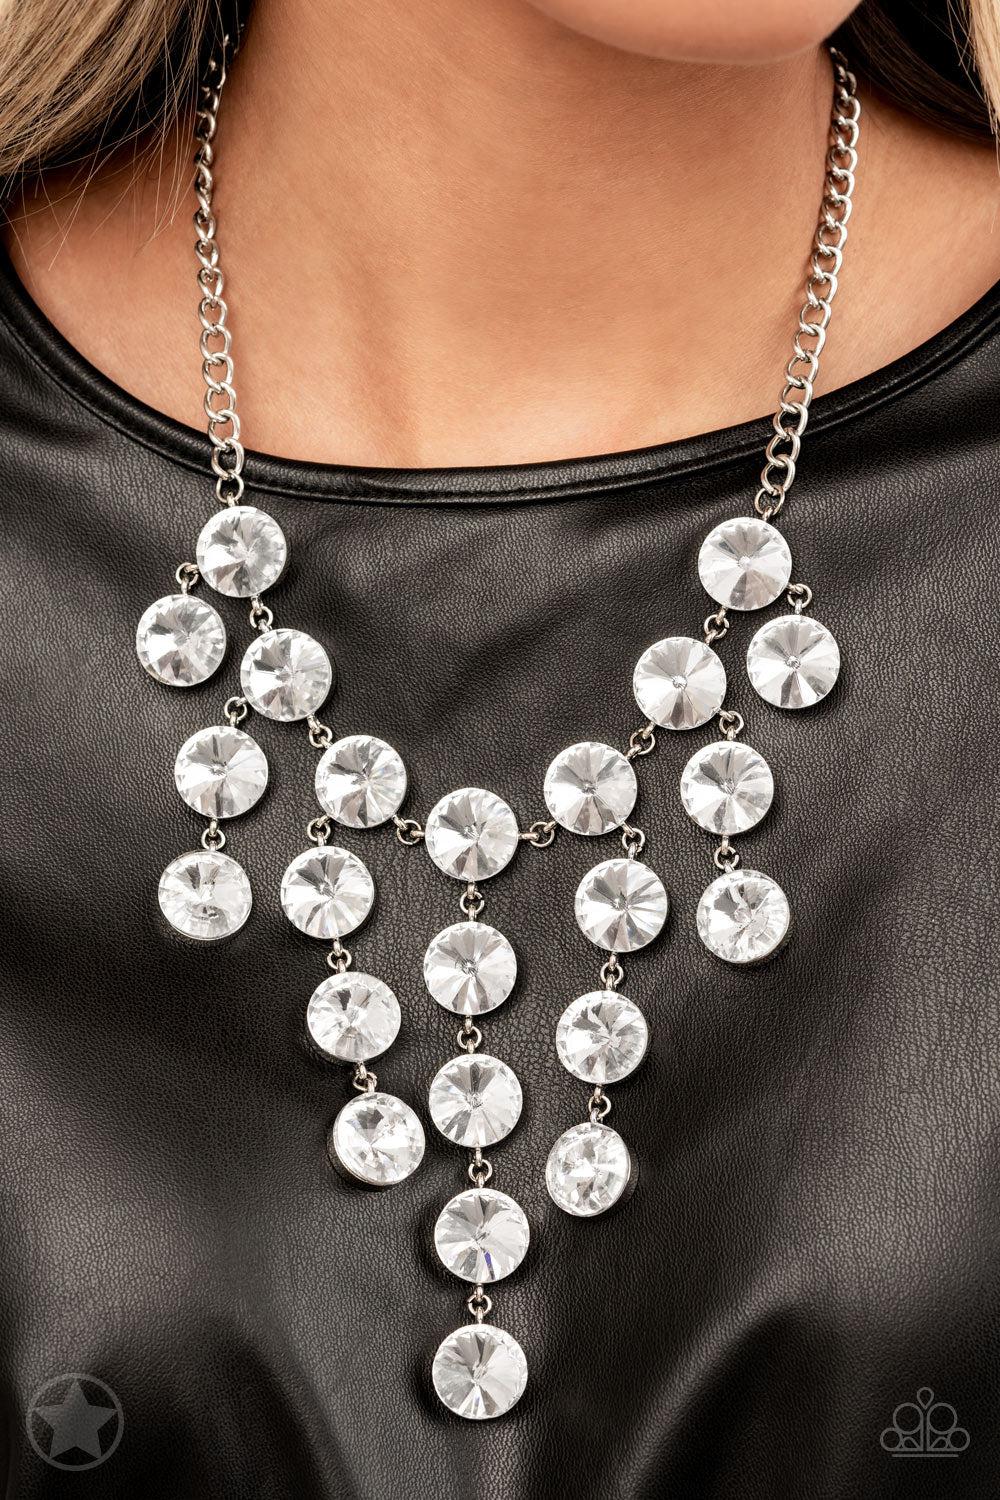 Spotlight Stunner White Rhinestone Necklace - Paparazzi Accessories - model -CarasShop.com - $5 Jewelry by Cara Jewels